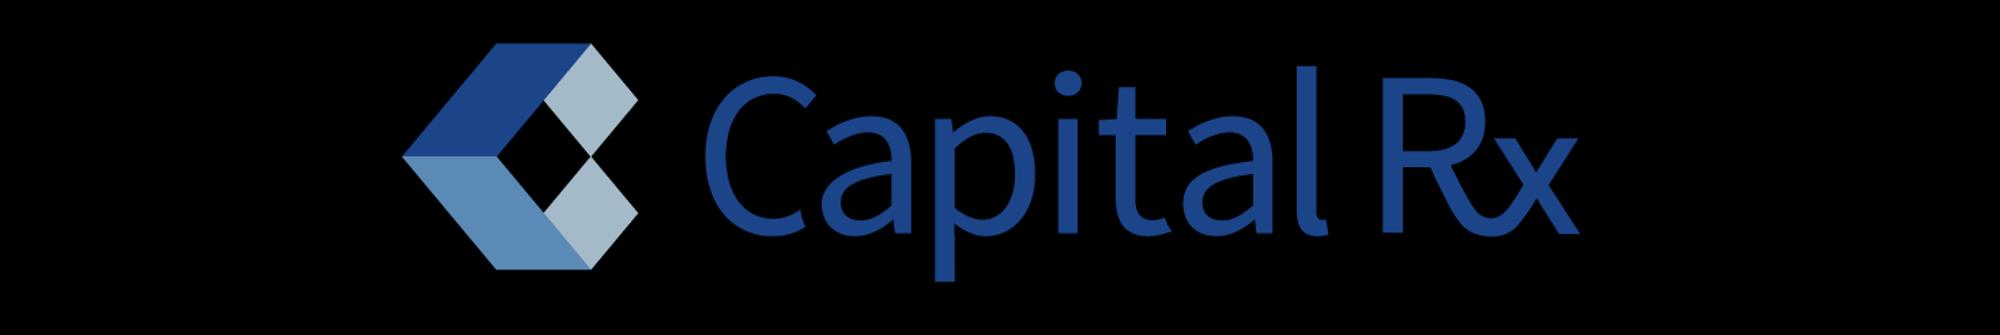 Capital Rx_logo